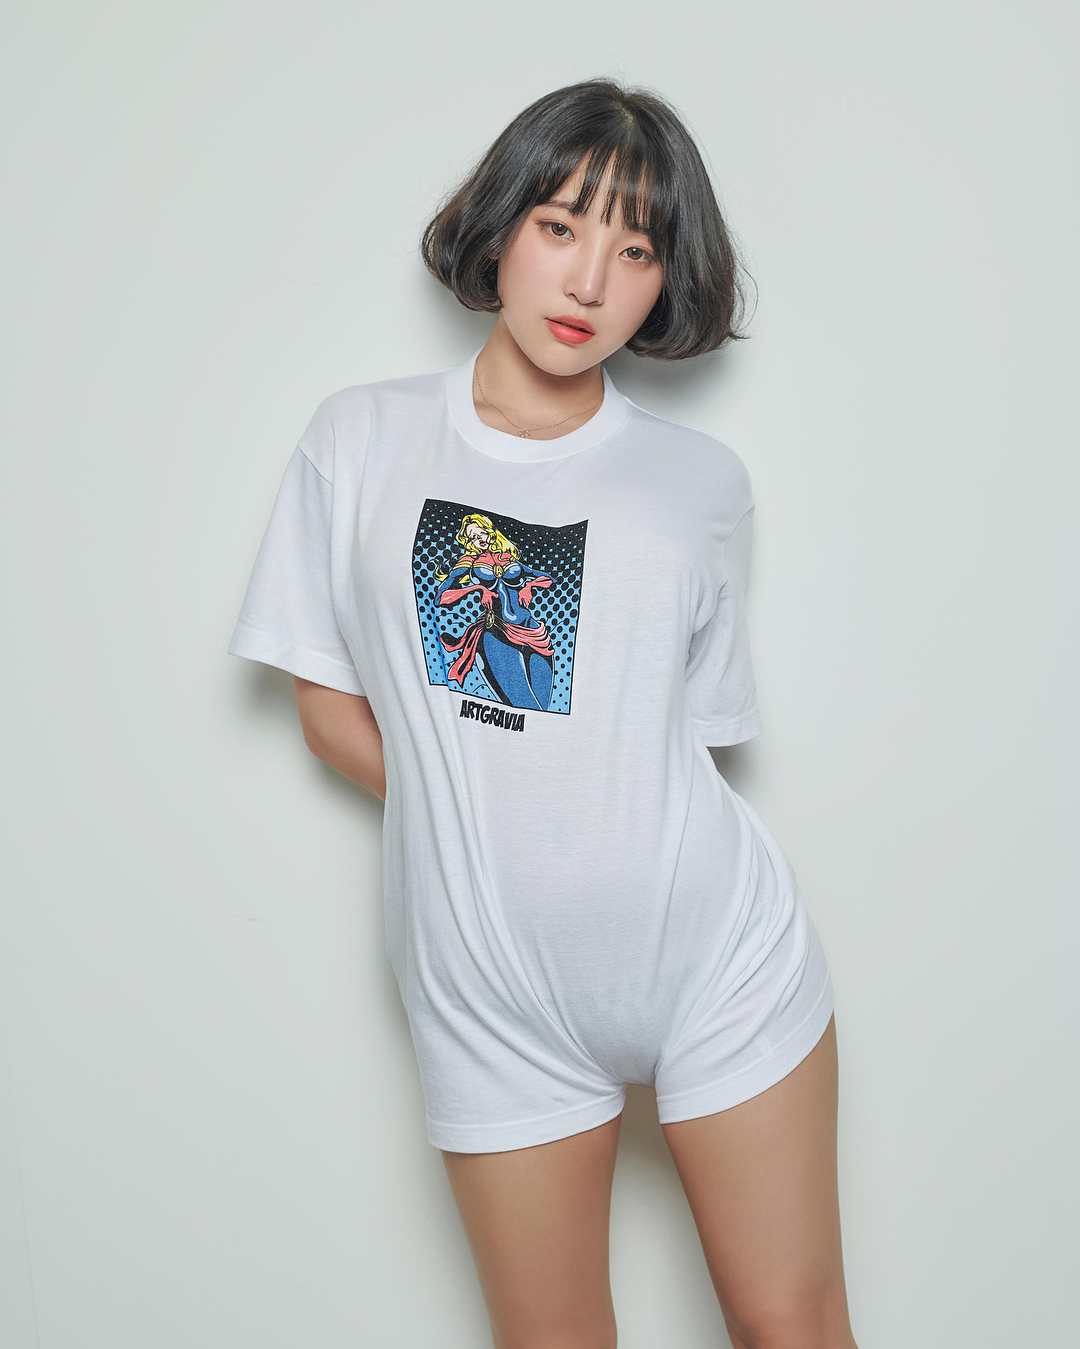 Inkyung97 Kang T-Shirt Camel Toe Hot Sexy Korean Girl